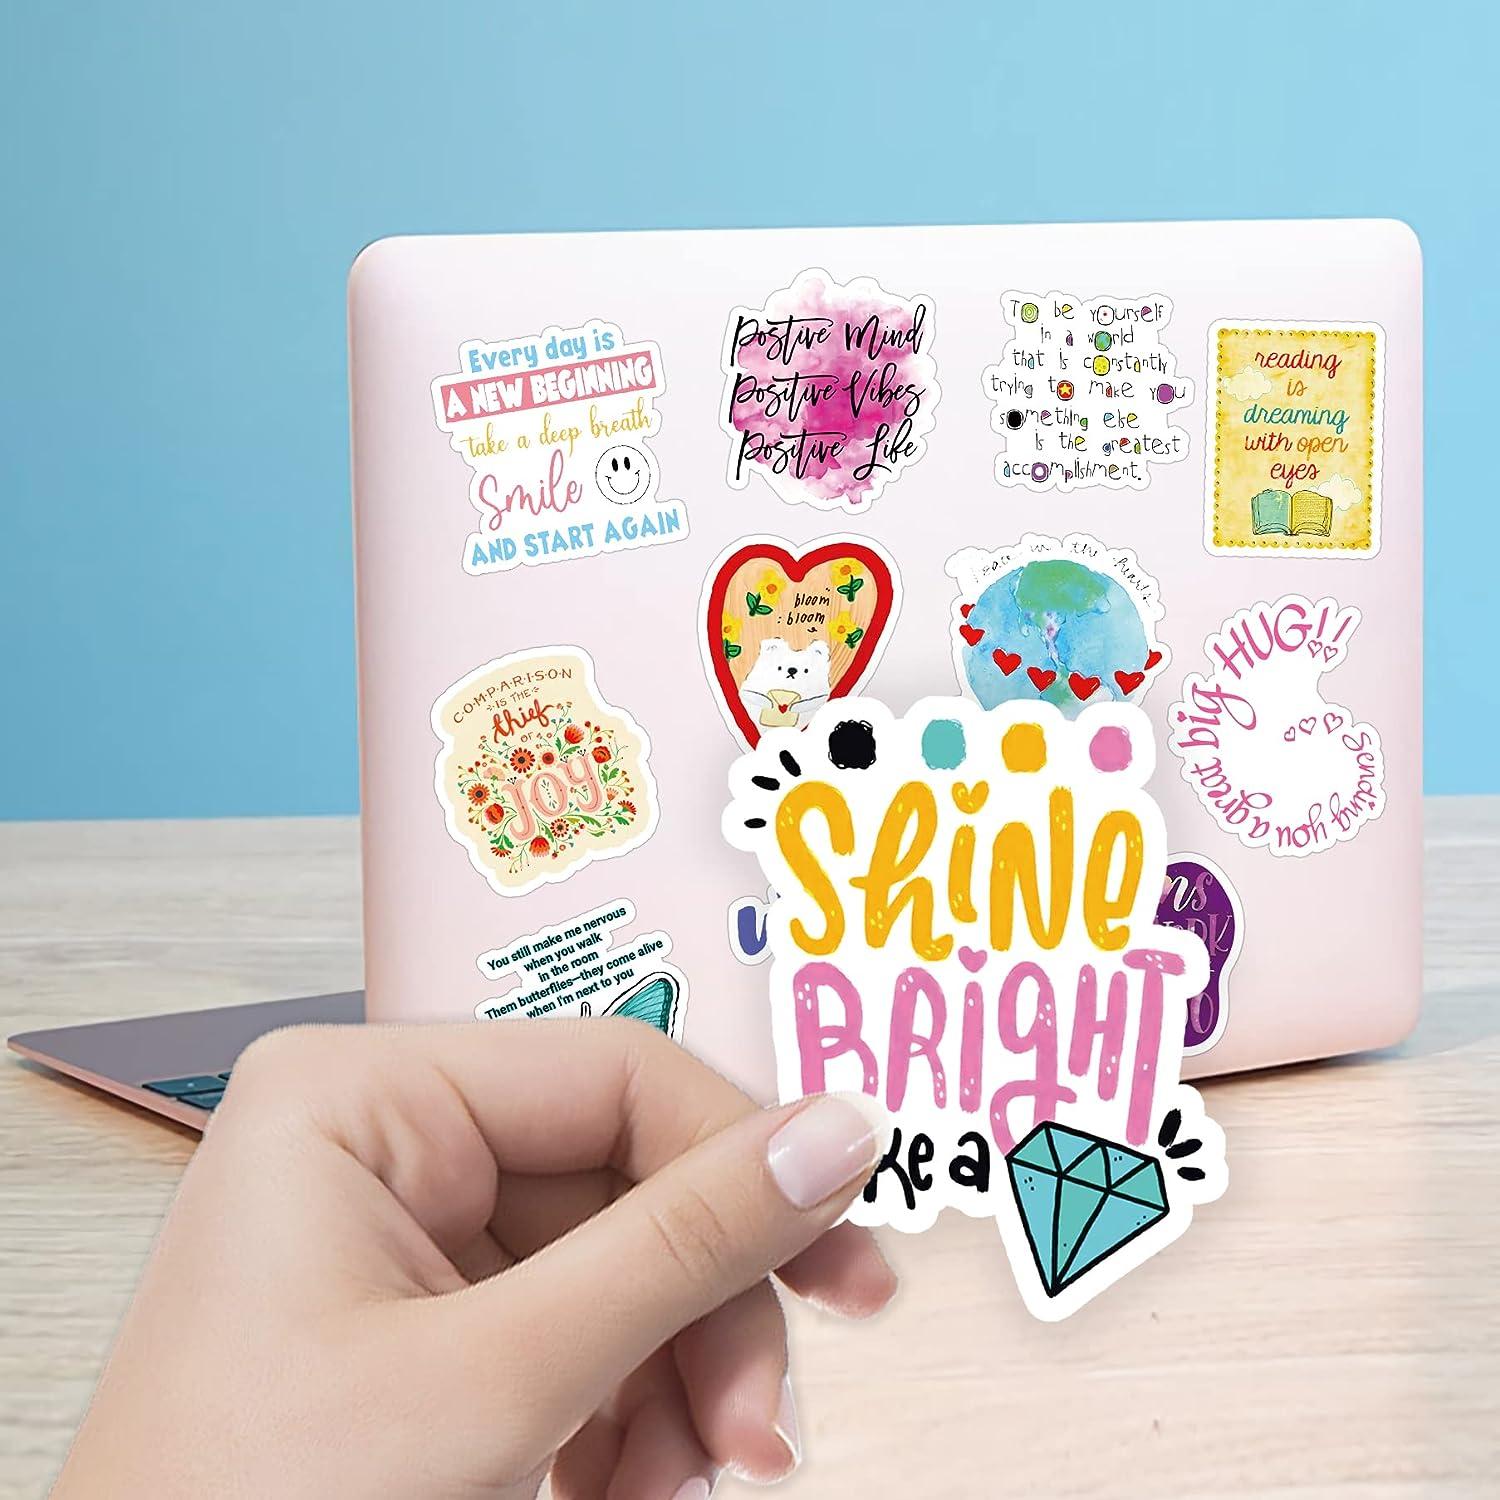 300PCS Motivational Sticker Inspirational Words Stickers for Teens